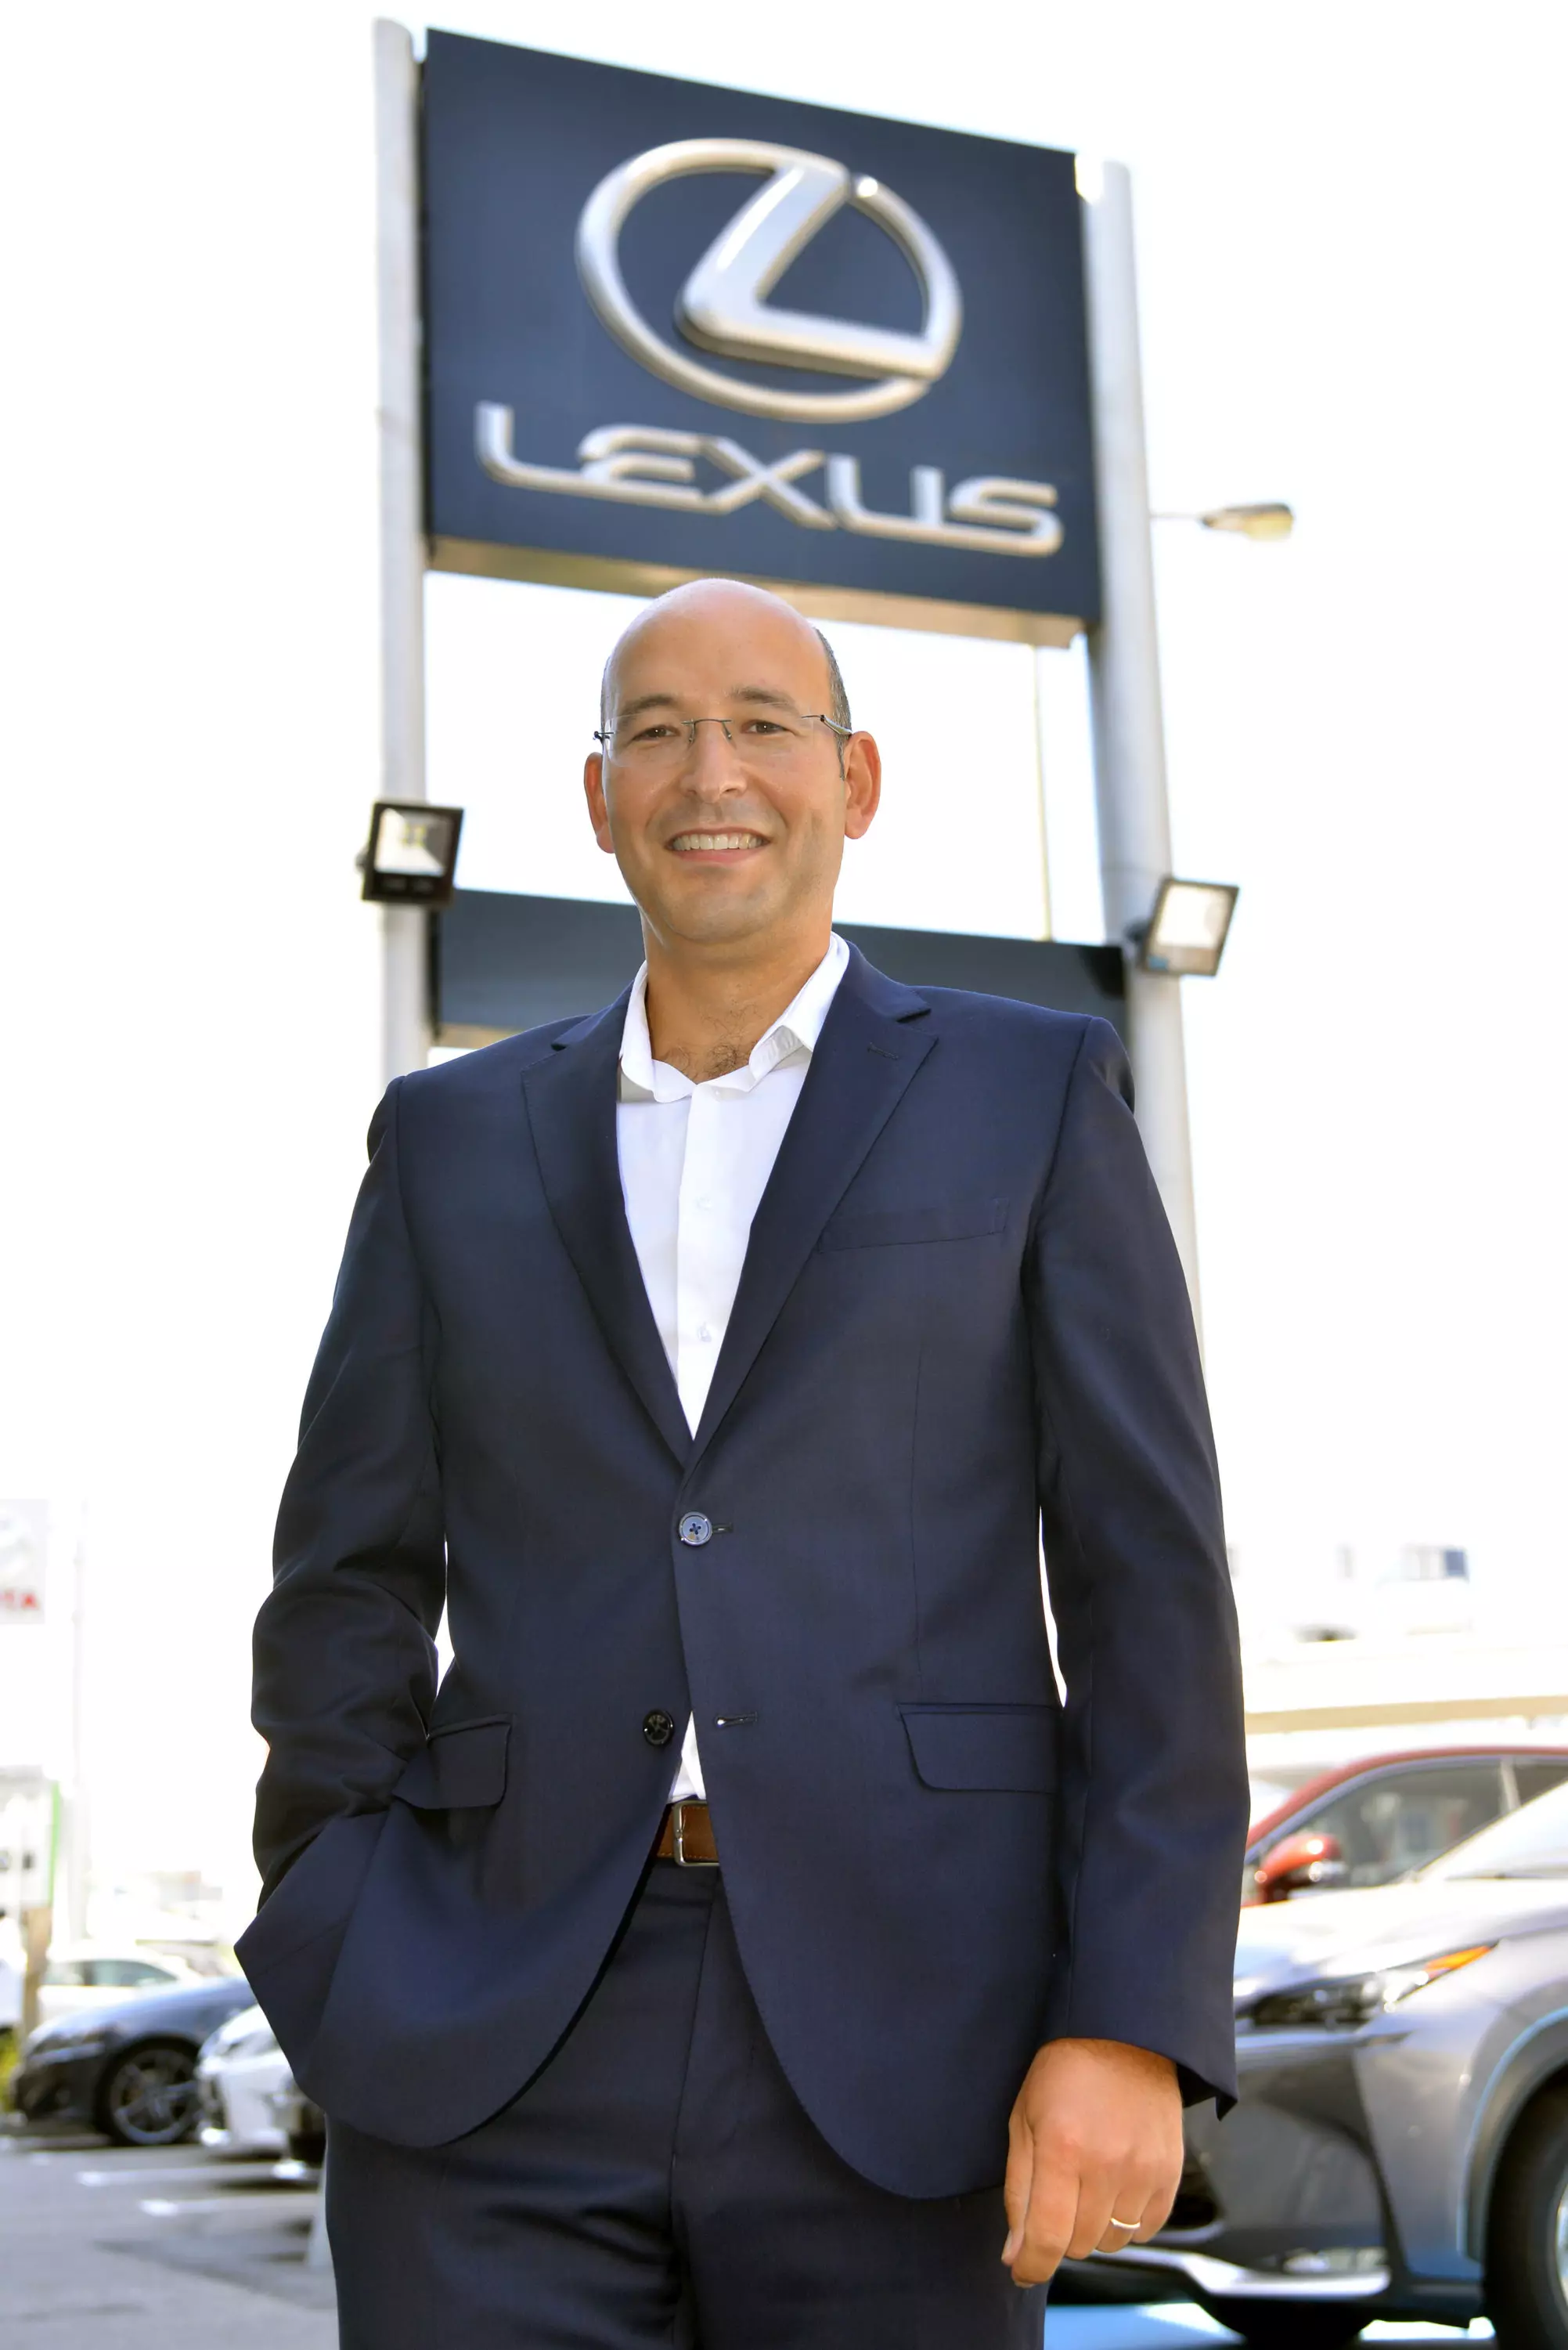 Victor Marques, Kommunikatiounsdirekter bei Lexus Portugal